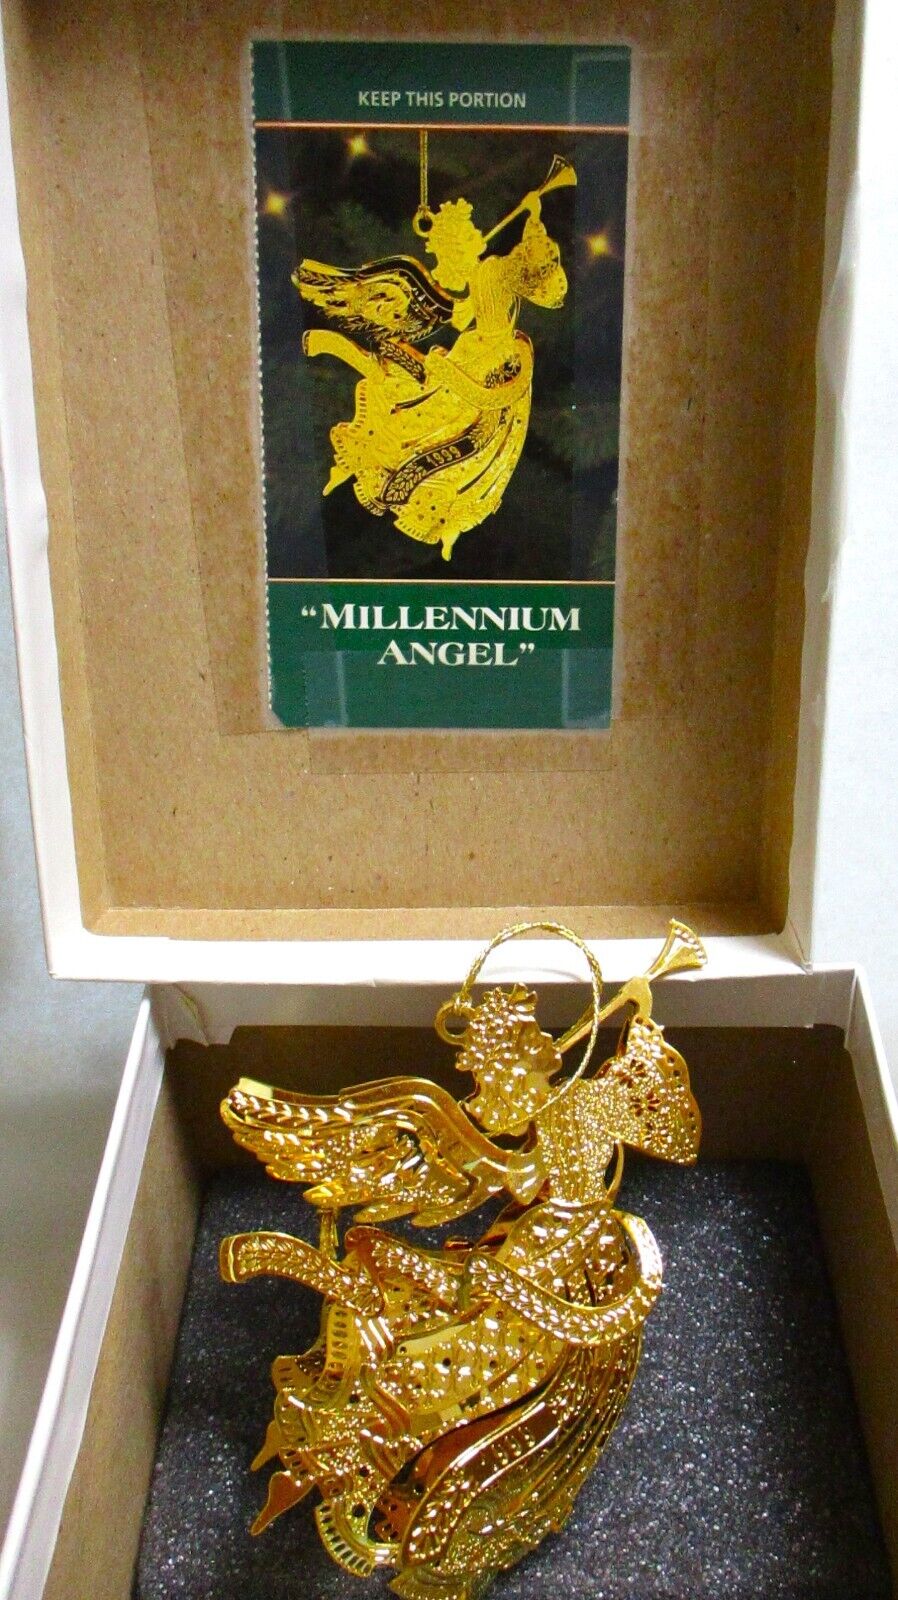 1999 DANBURY MINT ANNUAL GOLD CHRISTMAS ORNAMENT, MILLENNIUM ANGEL, WITH BOX